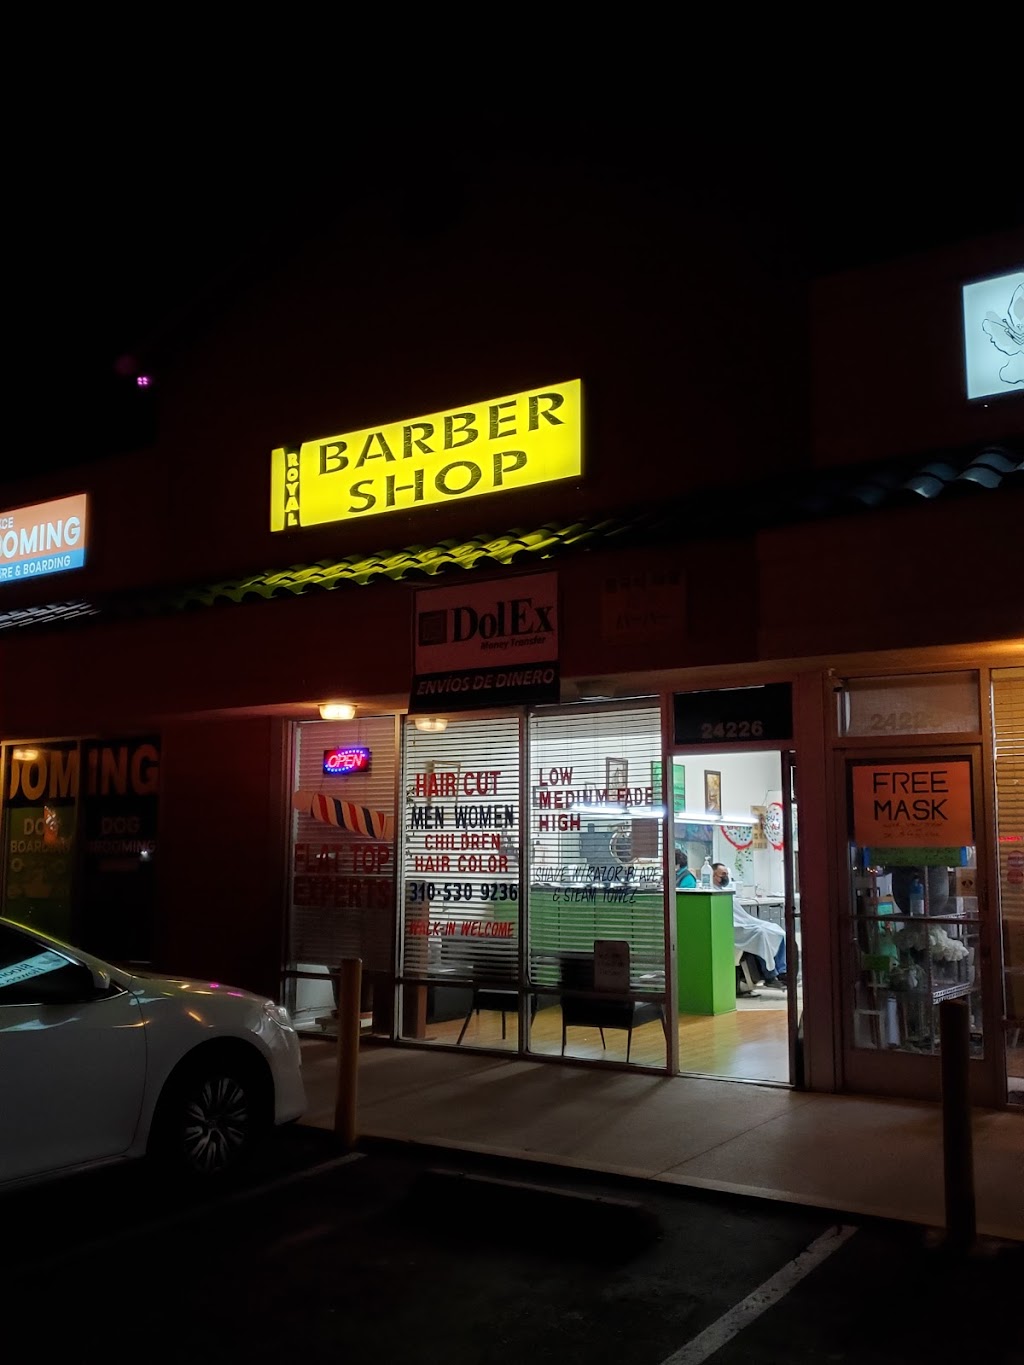 Royal Barber Shop | 24226 Crenshaw Blvd, Torrance, CA 90505 | Phone: (310) 530-9236